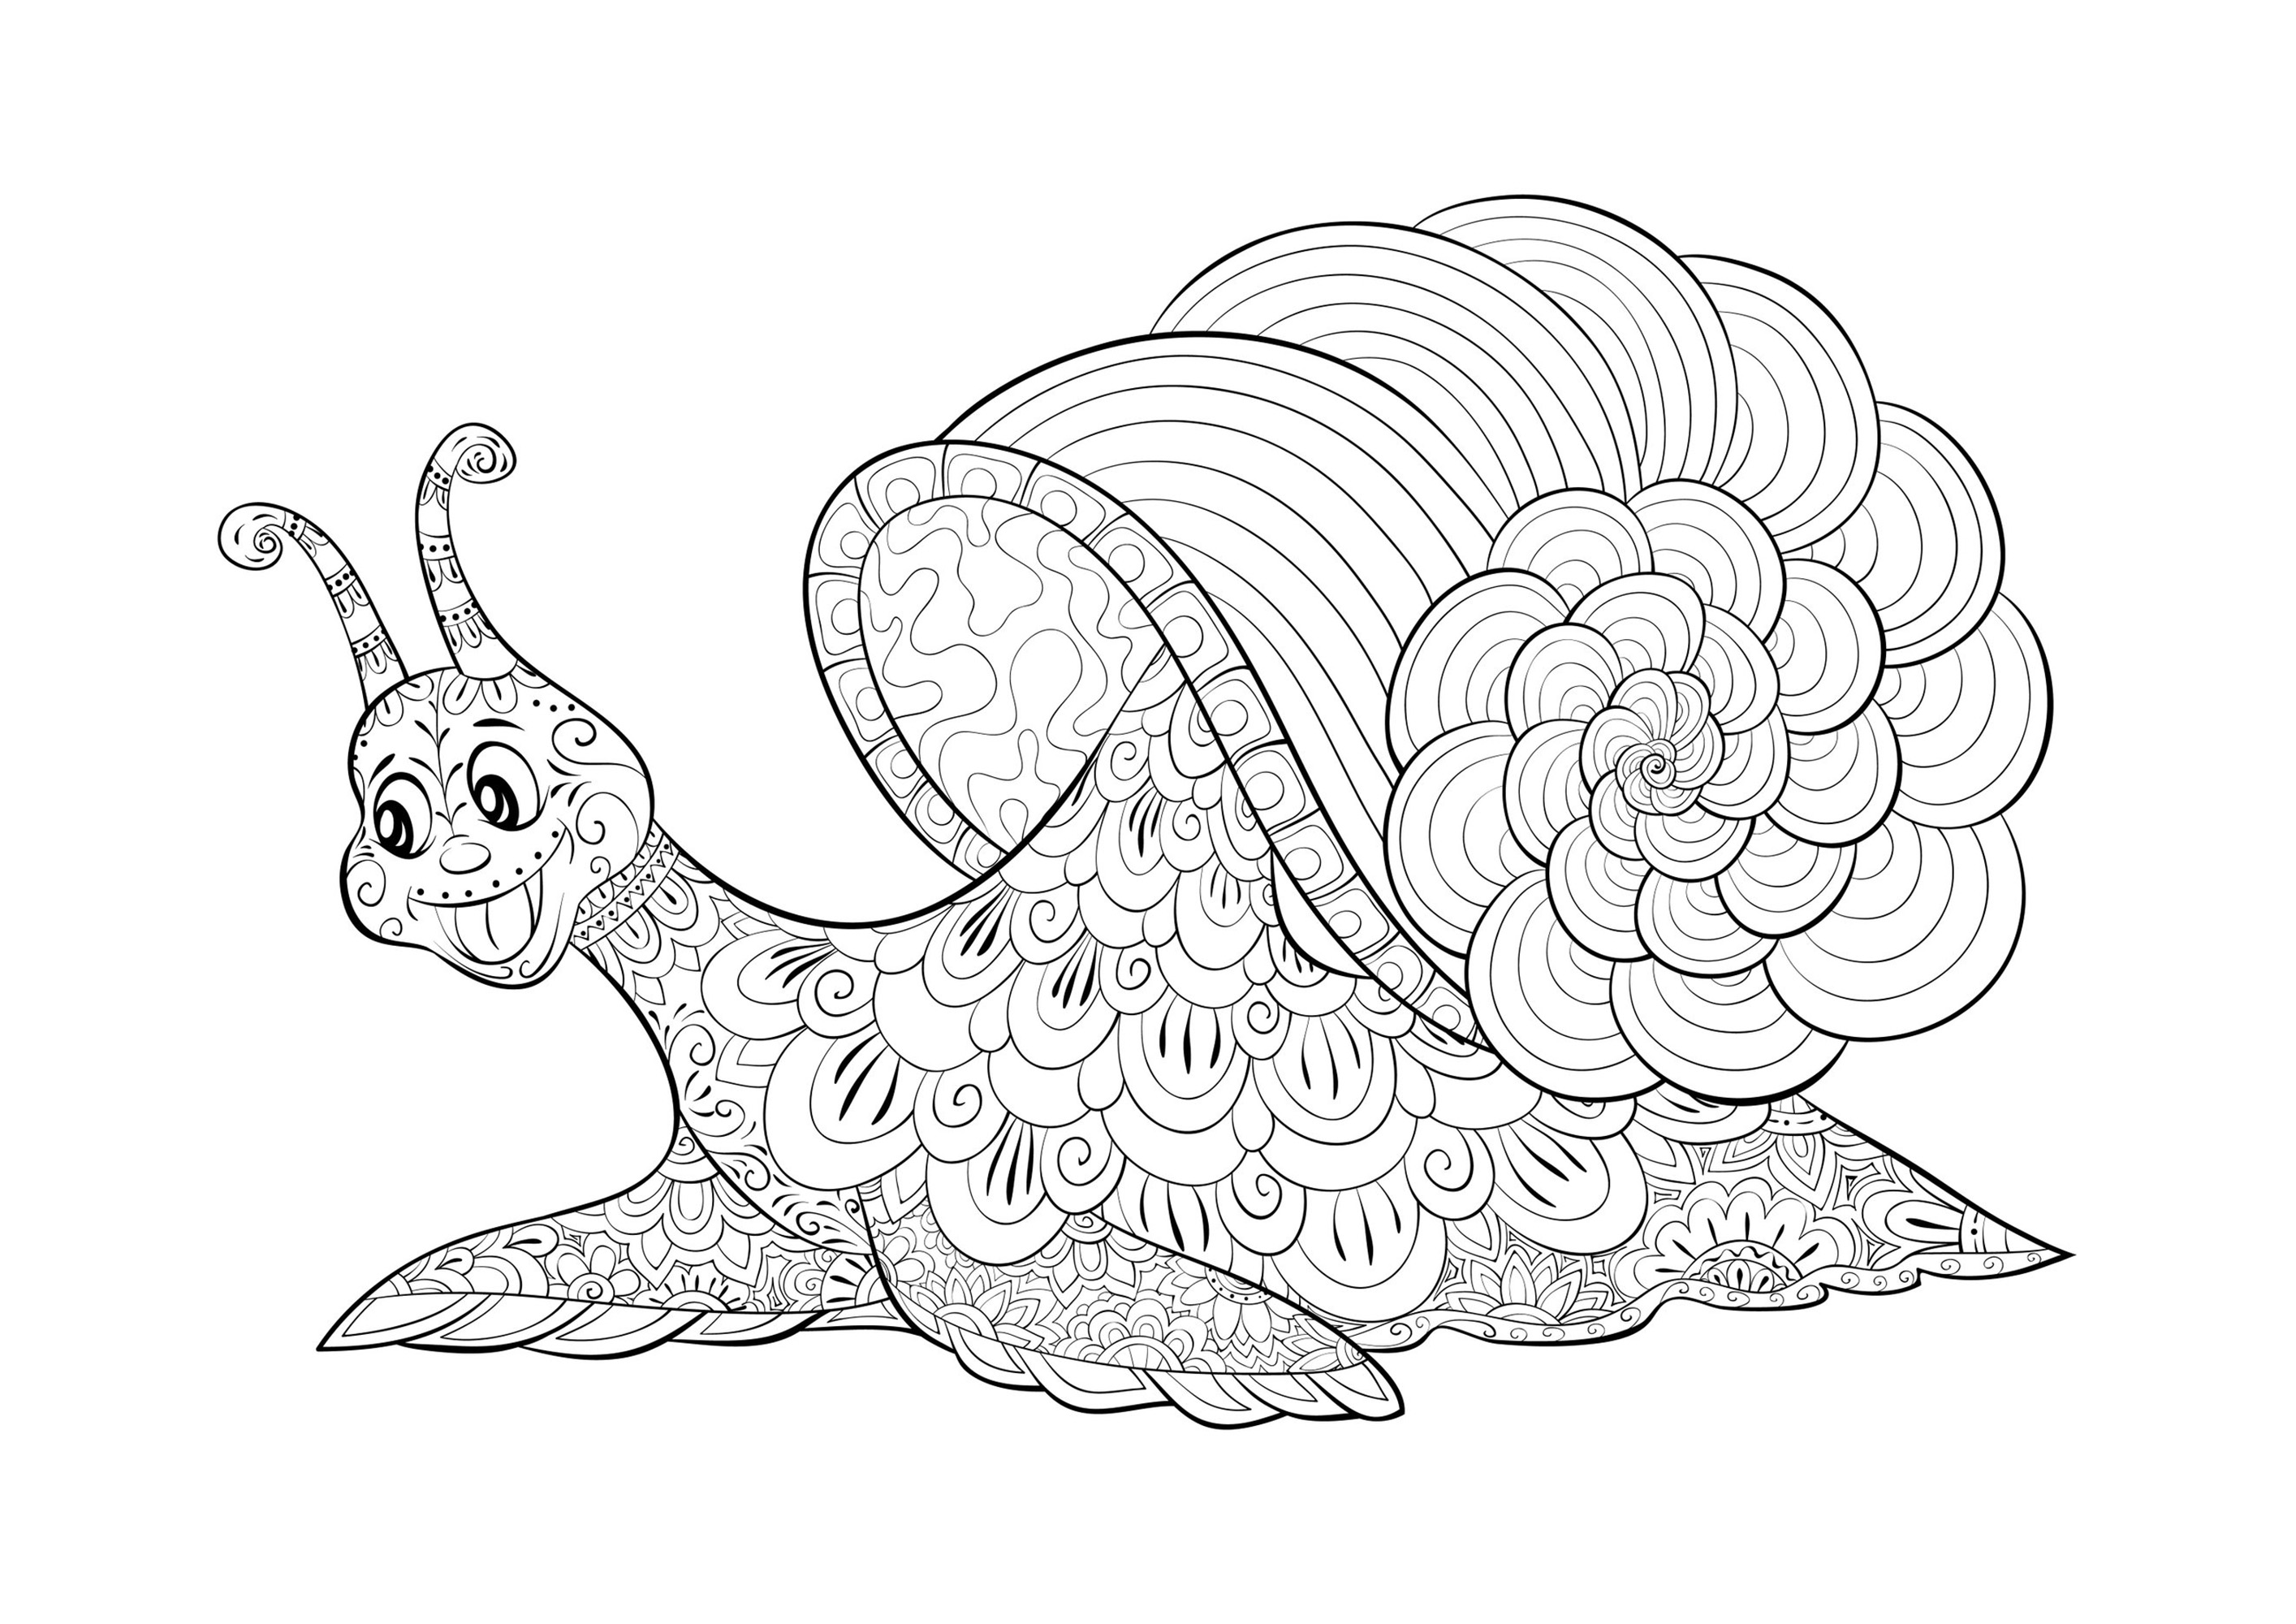 Smiling snail, Source : 123rf   Artist : Nonuzza